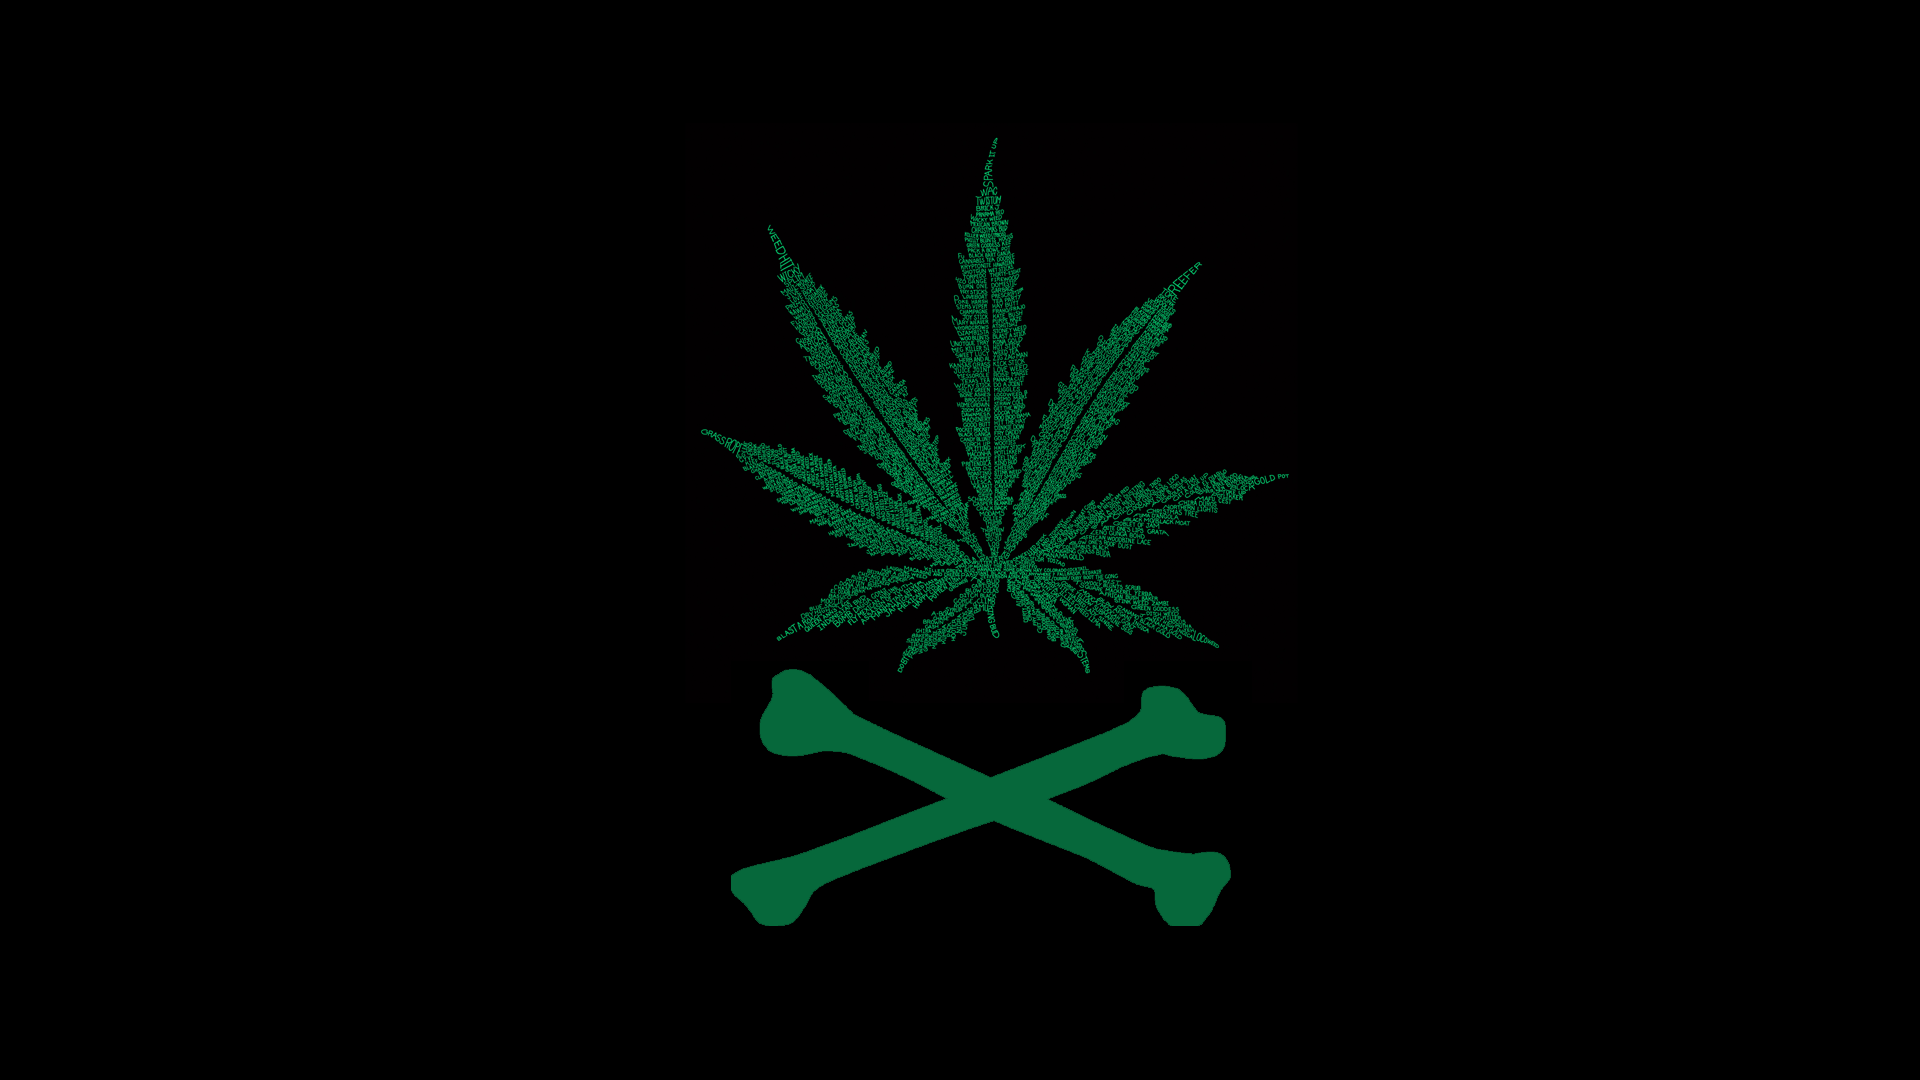 px marijuana image for desktop HD